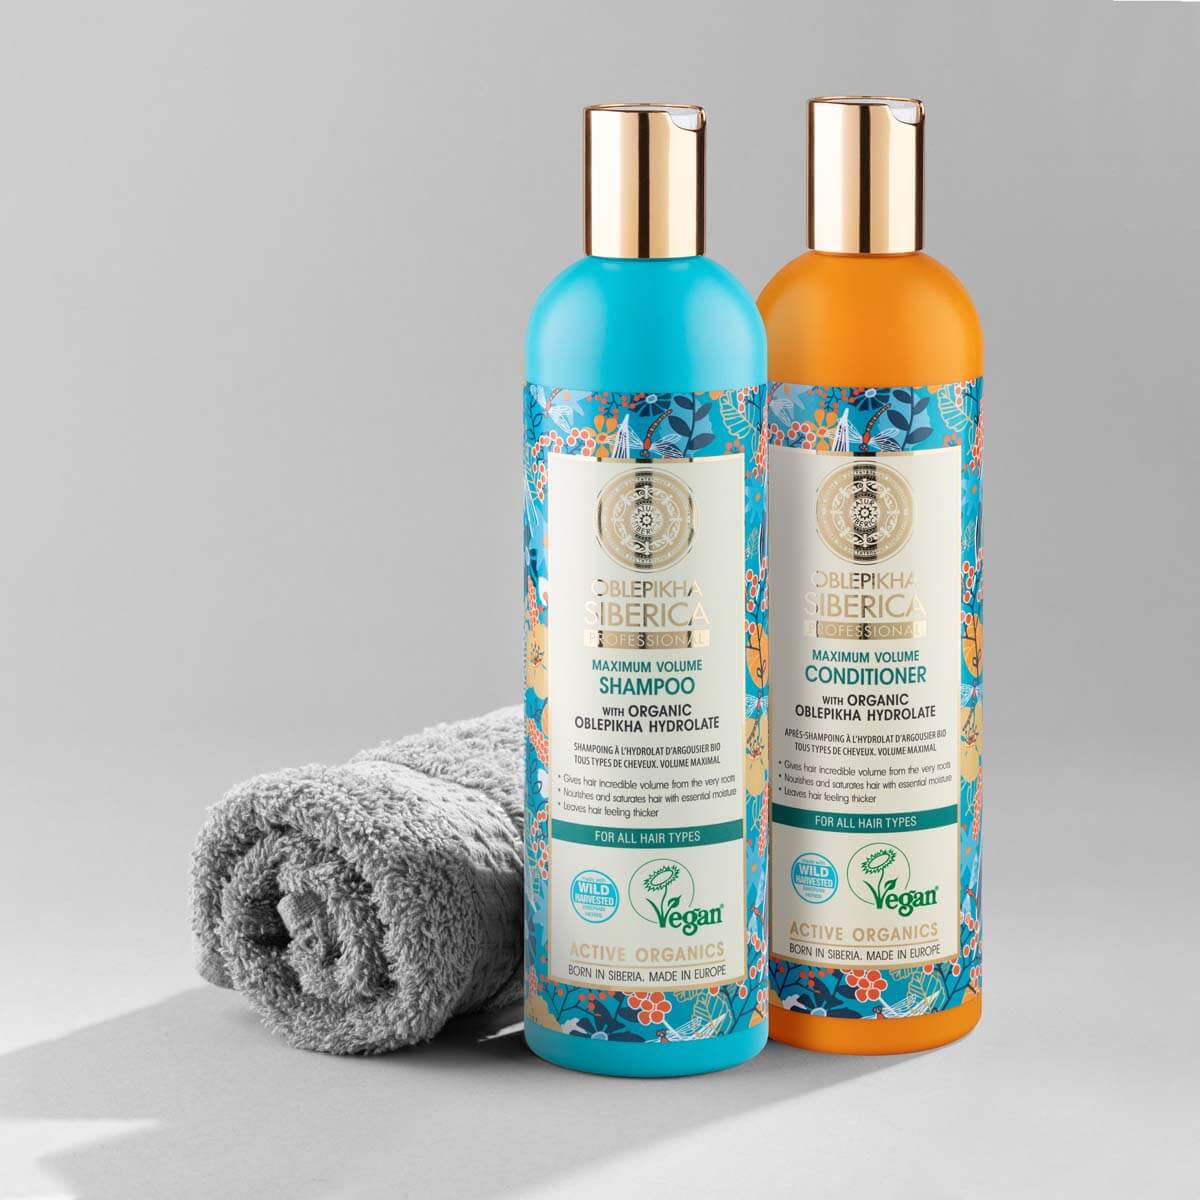 biolaven organic natura siberica szampon